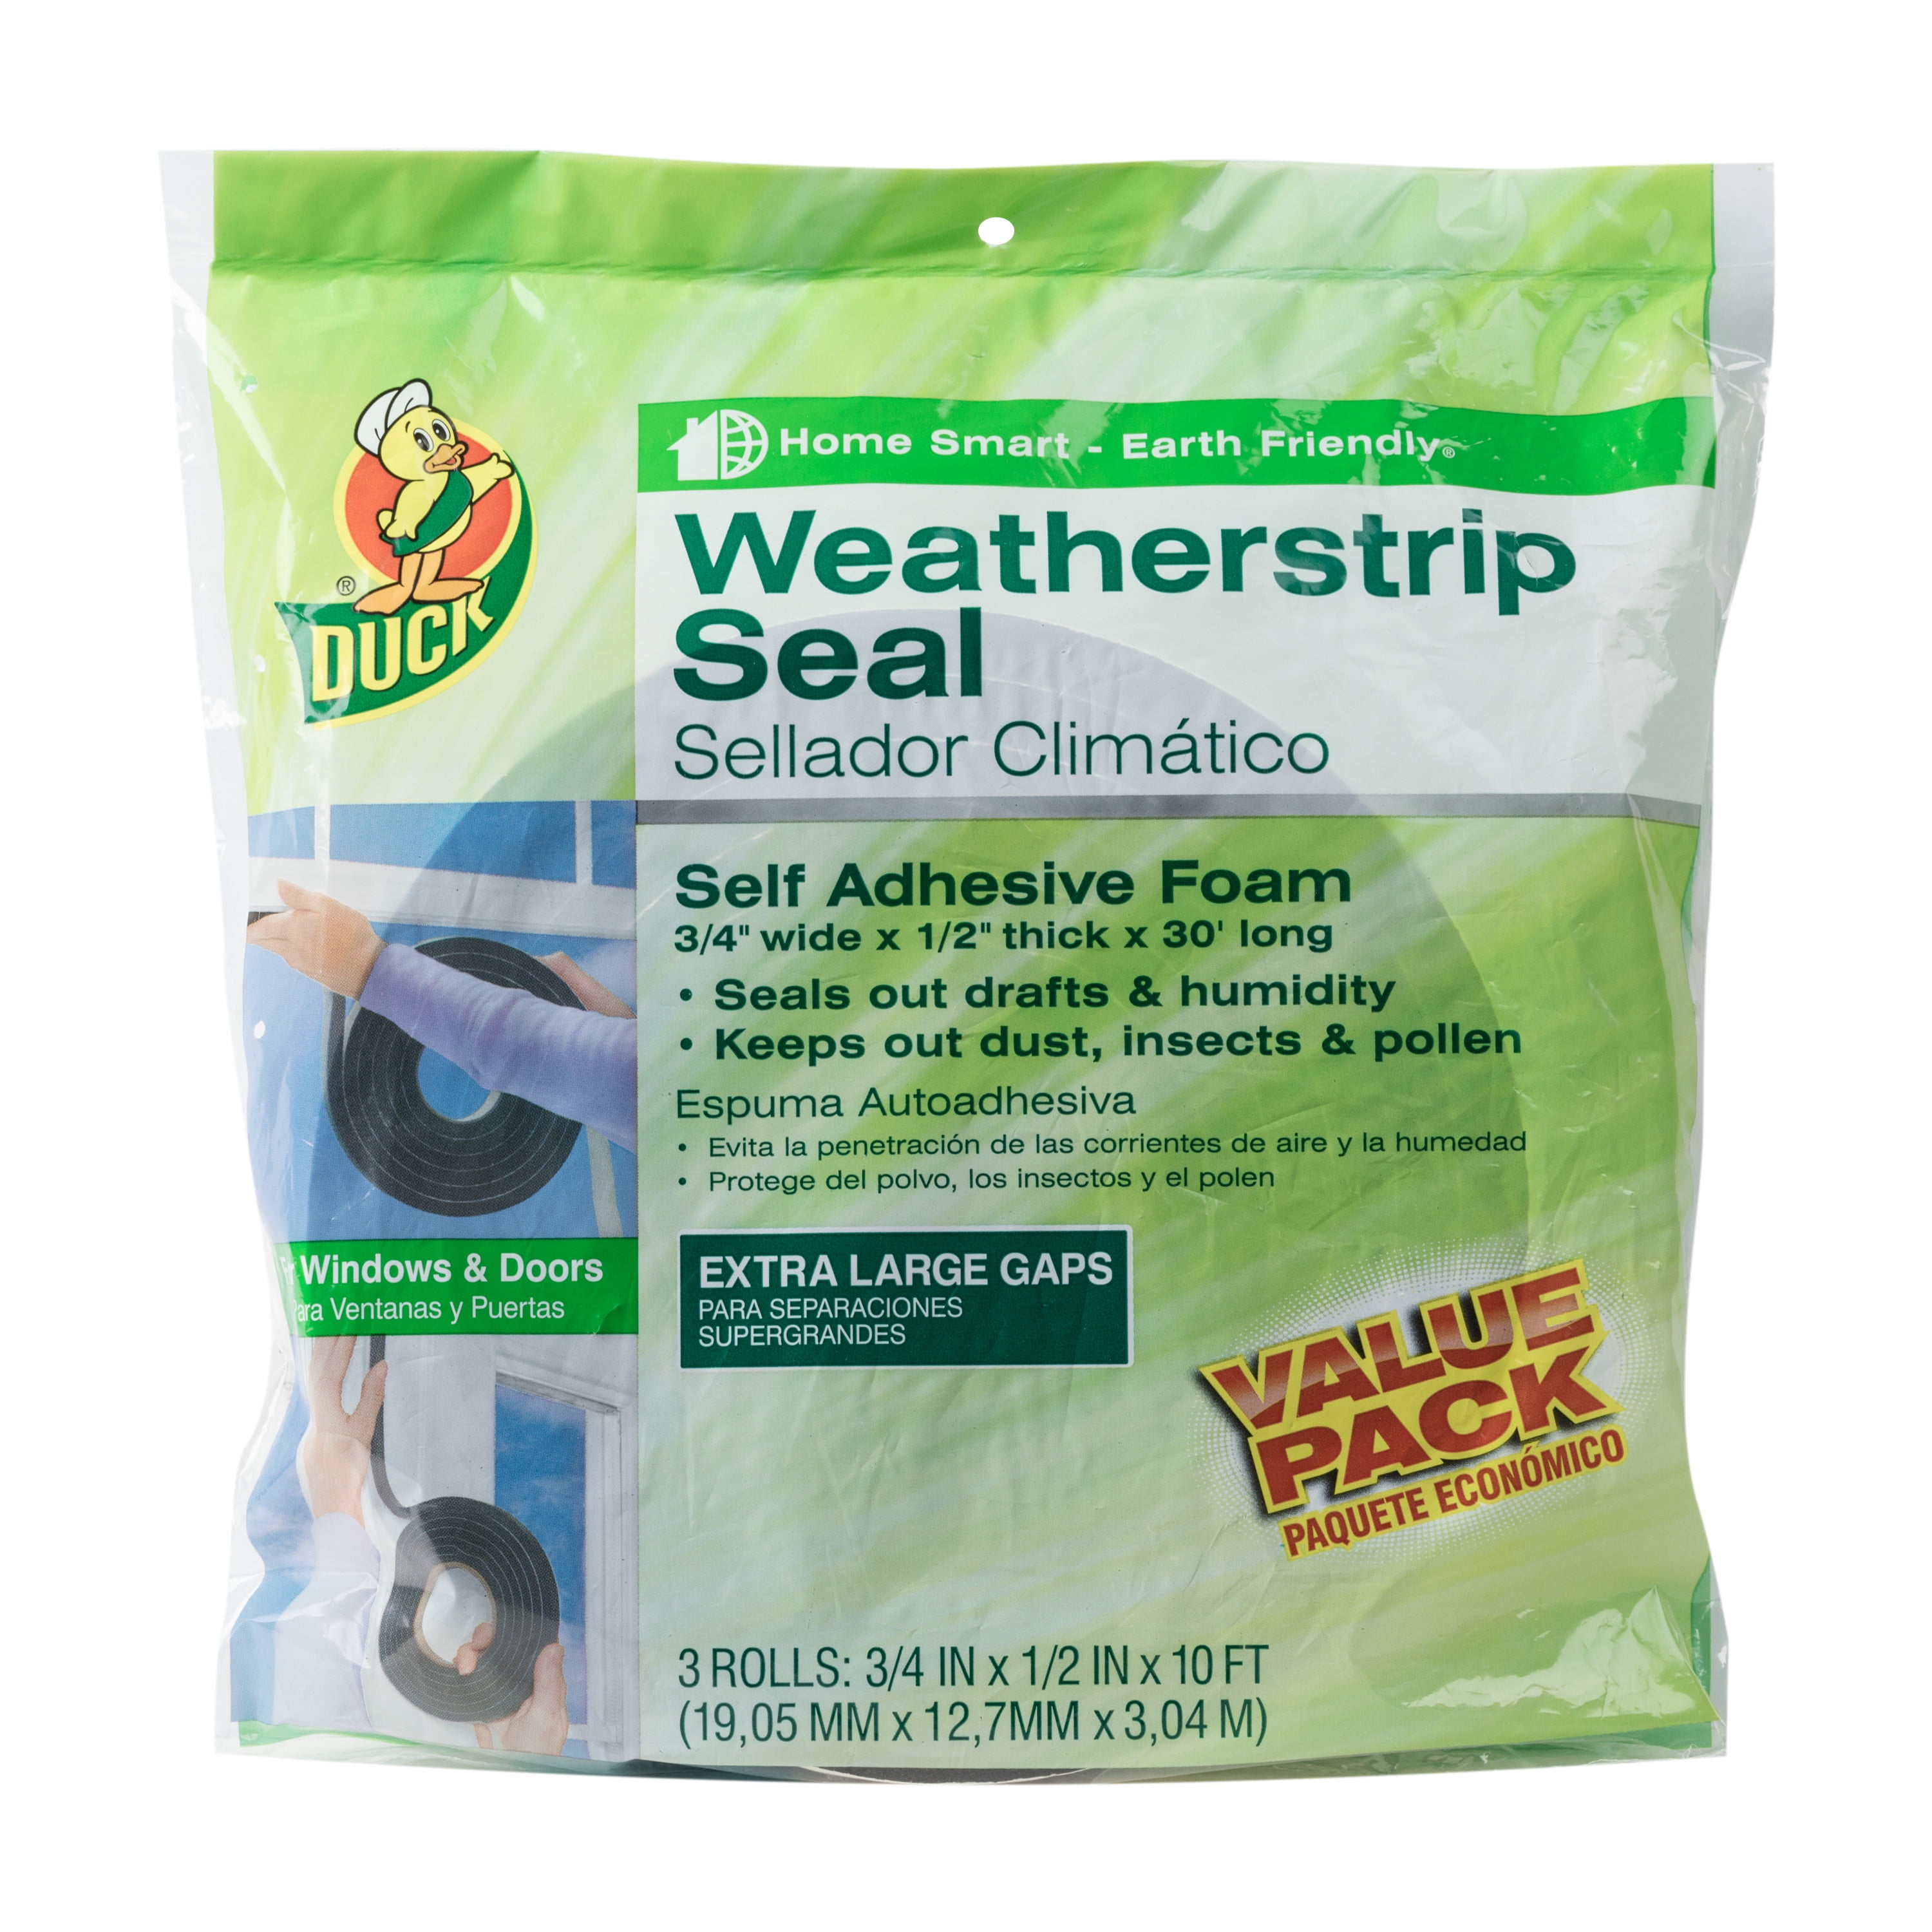 *2 PACK* Duck High Quality Weatherstrip Seal 2 Medium Gap Self Adhesive Foam 